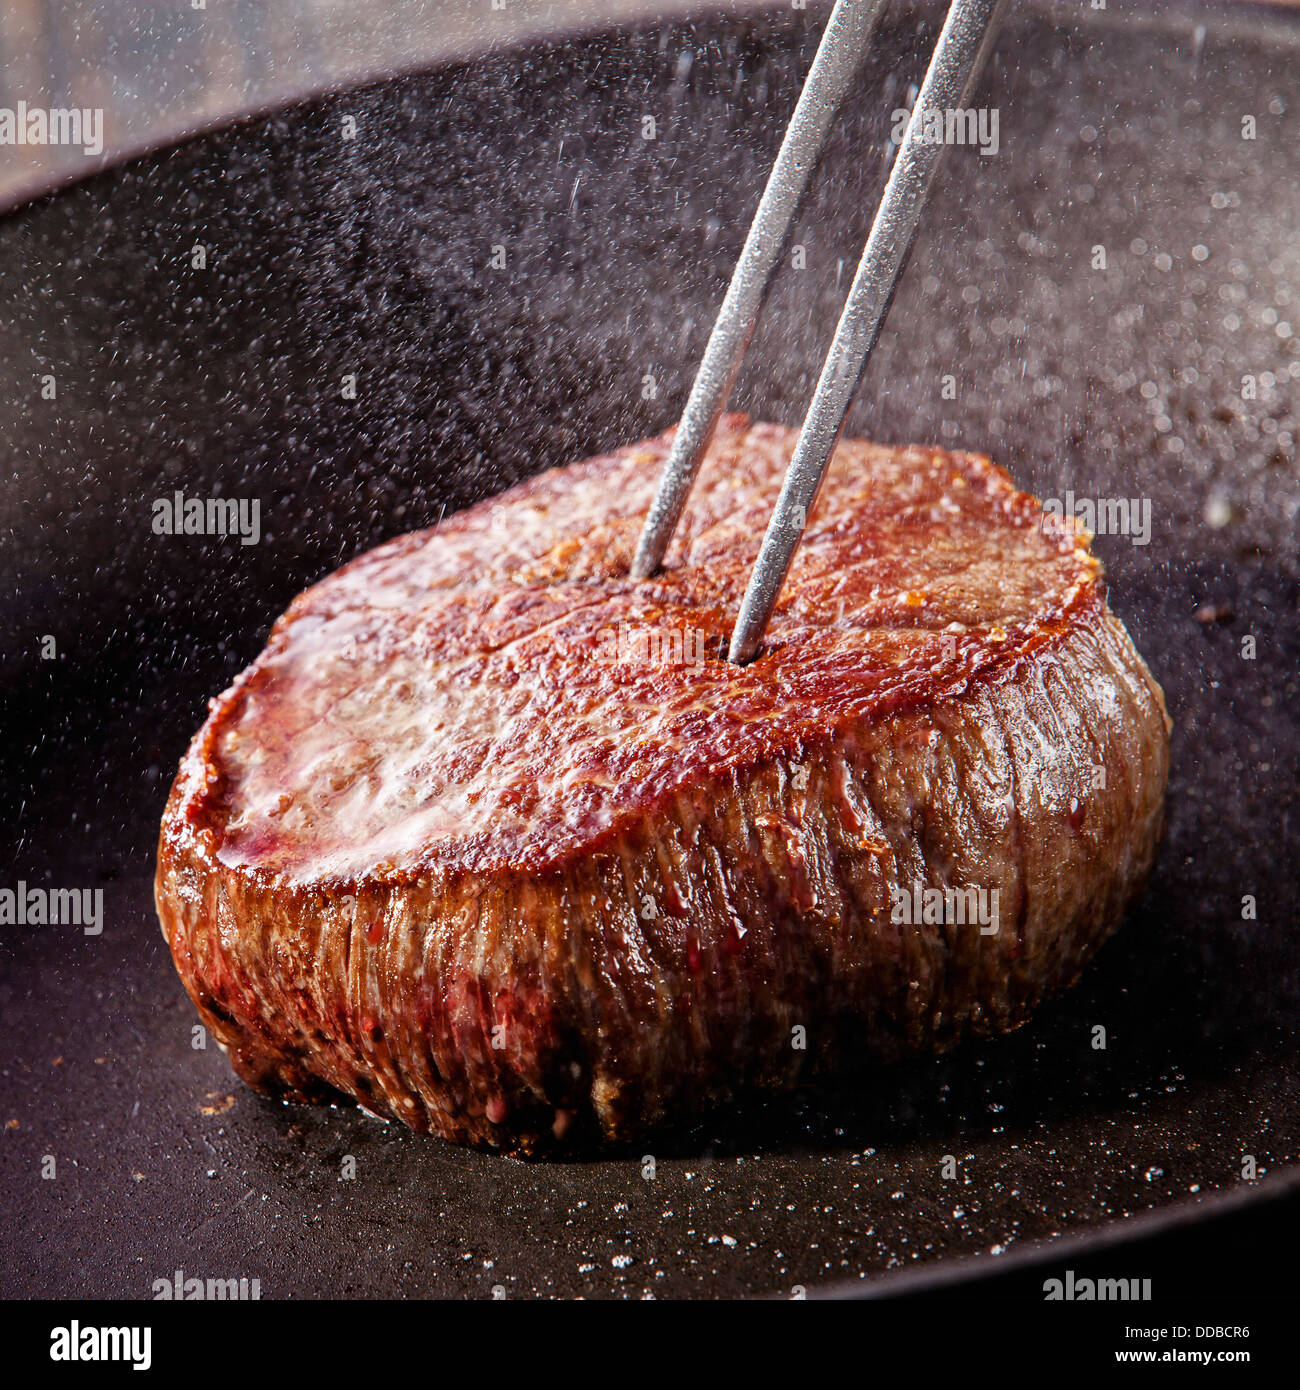 Beef steak fried in pan Stock Photo